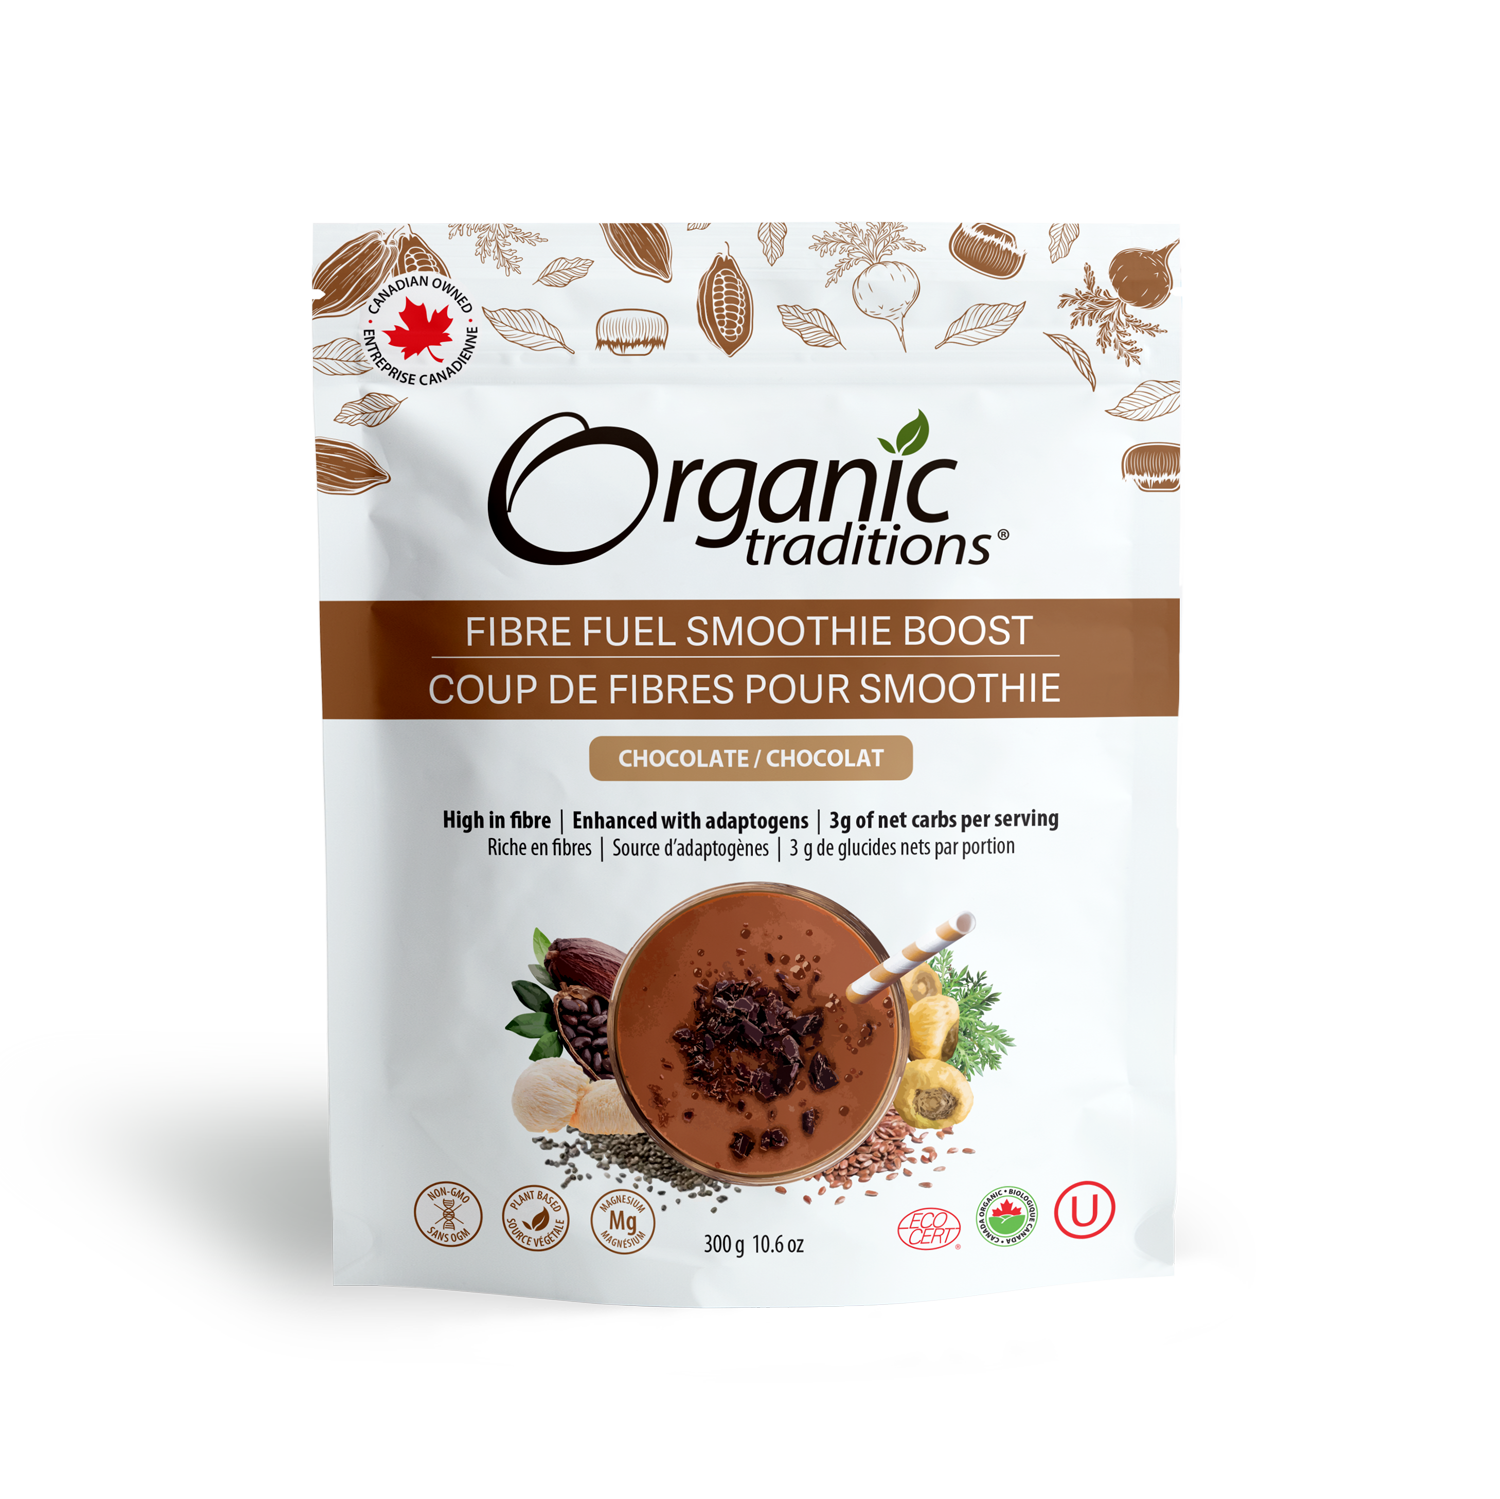 Organic Chocolate Fibre Fuel Smoothie Boost